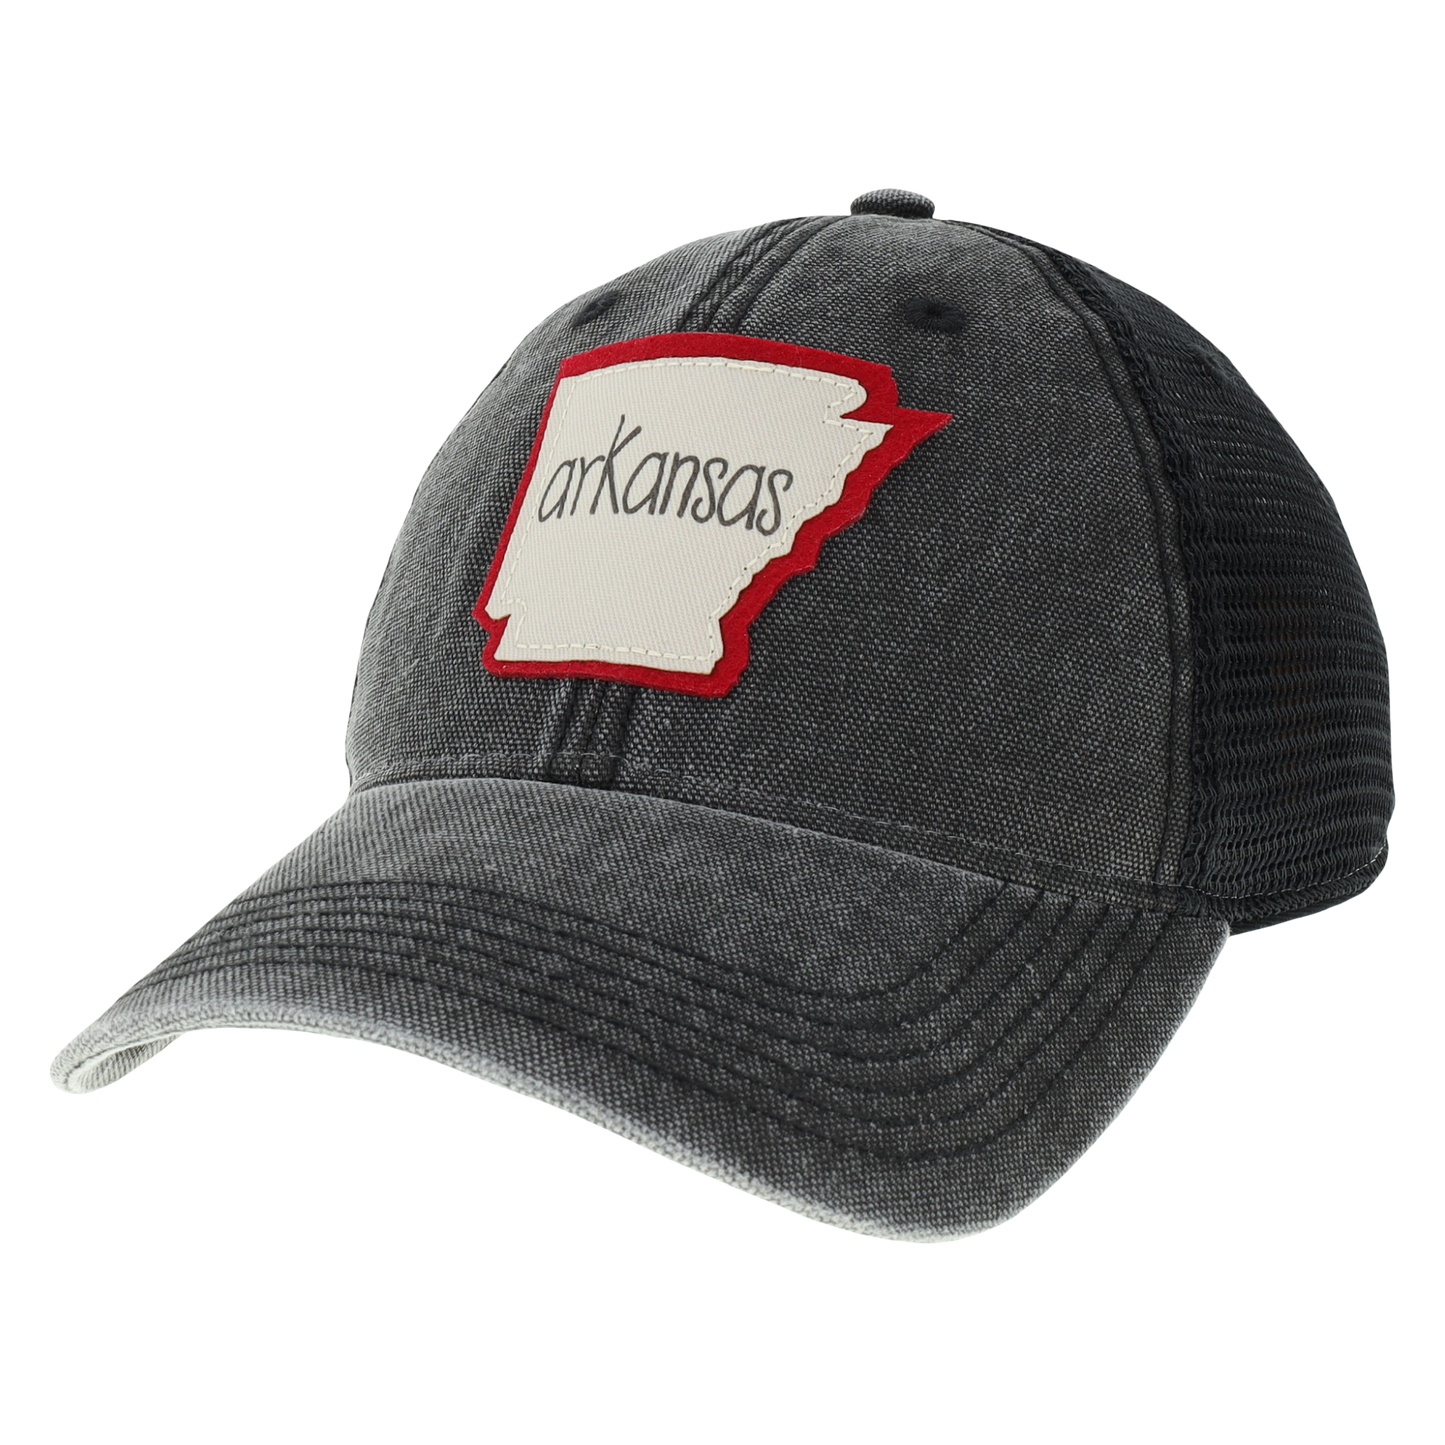 Arkansas Dashboard Trucker Hat in Black